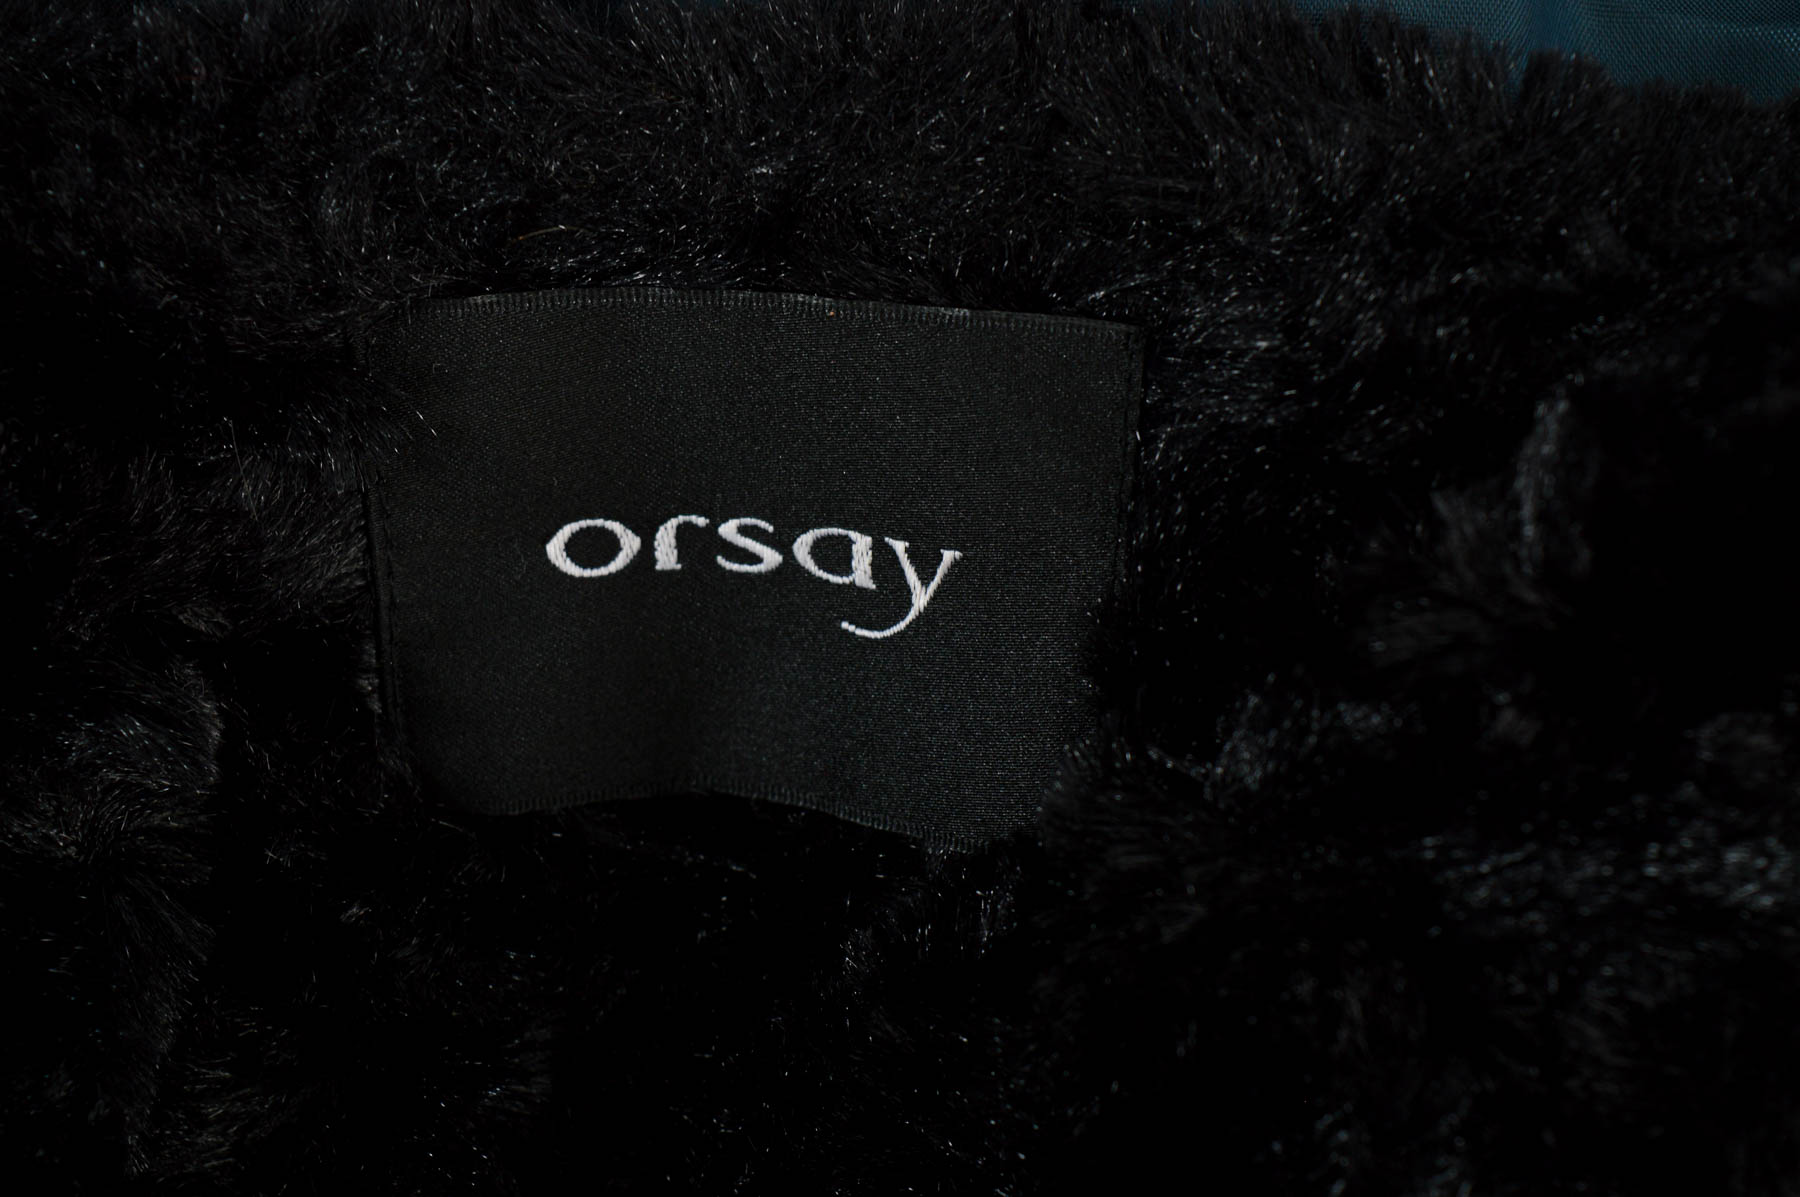 Palton de damă - Orsay - 2